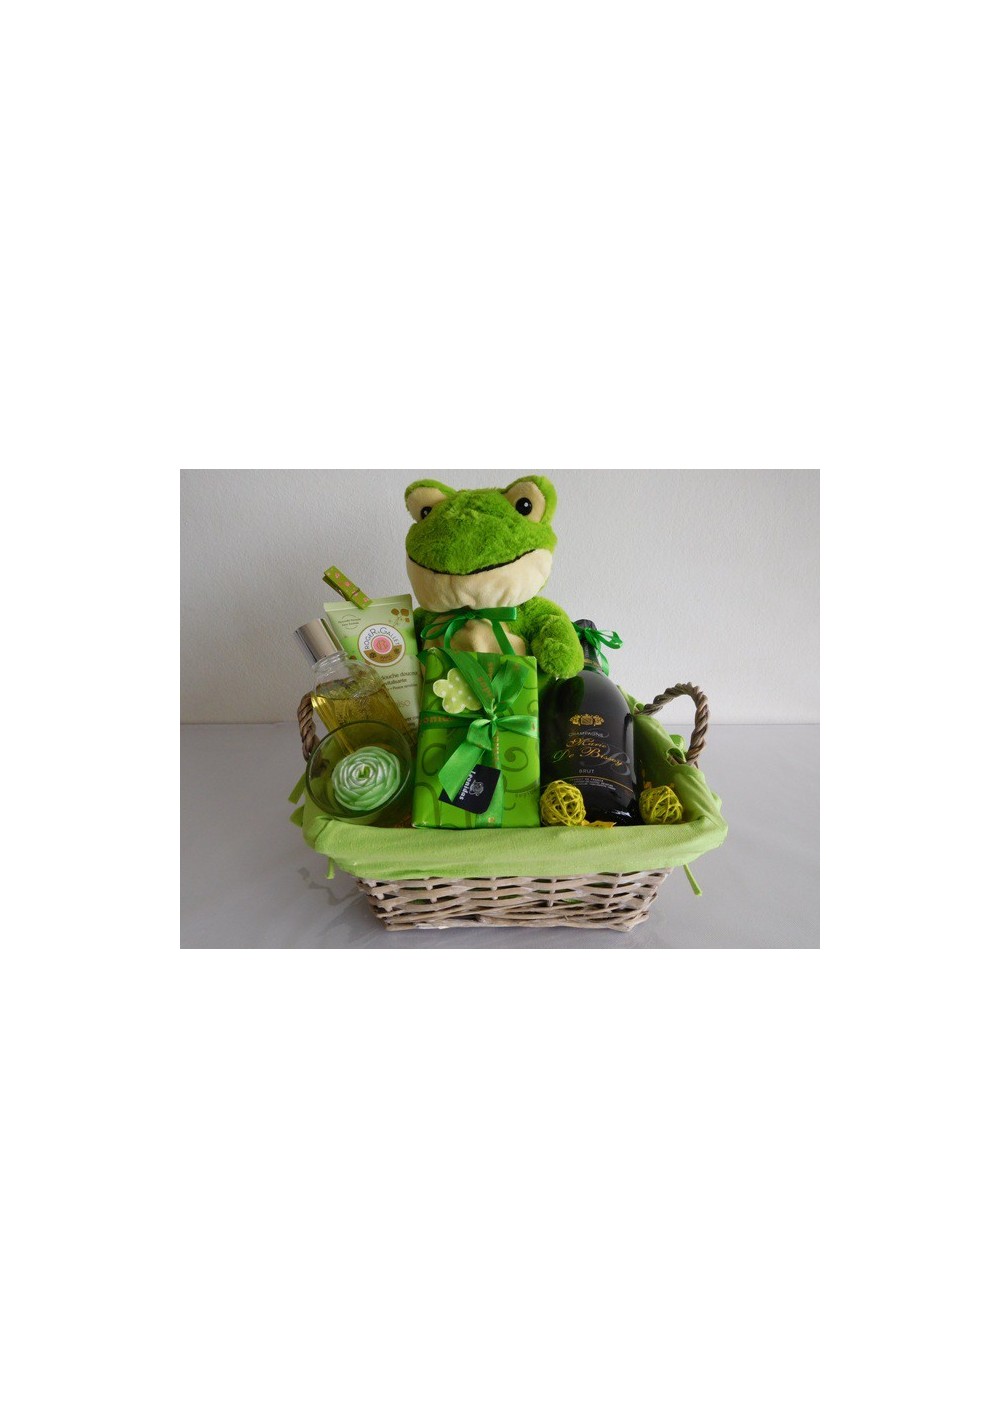 Birth gift "Green frog"